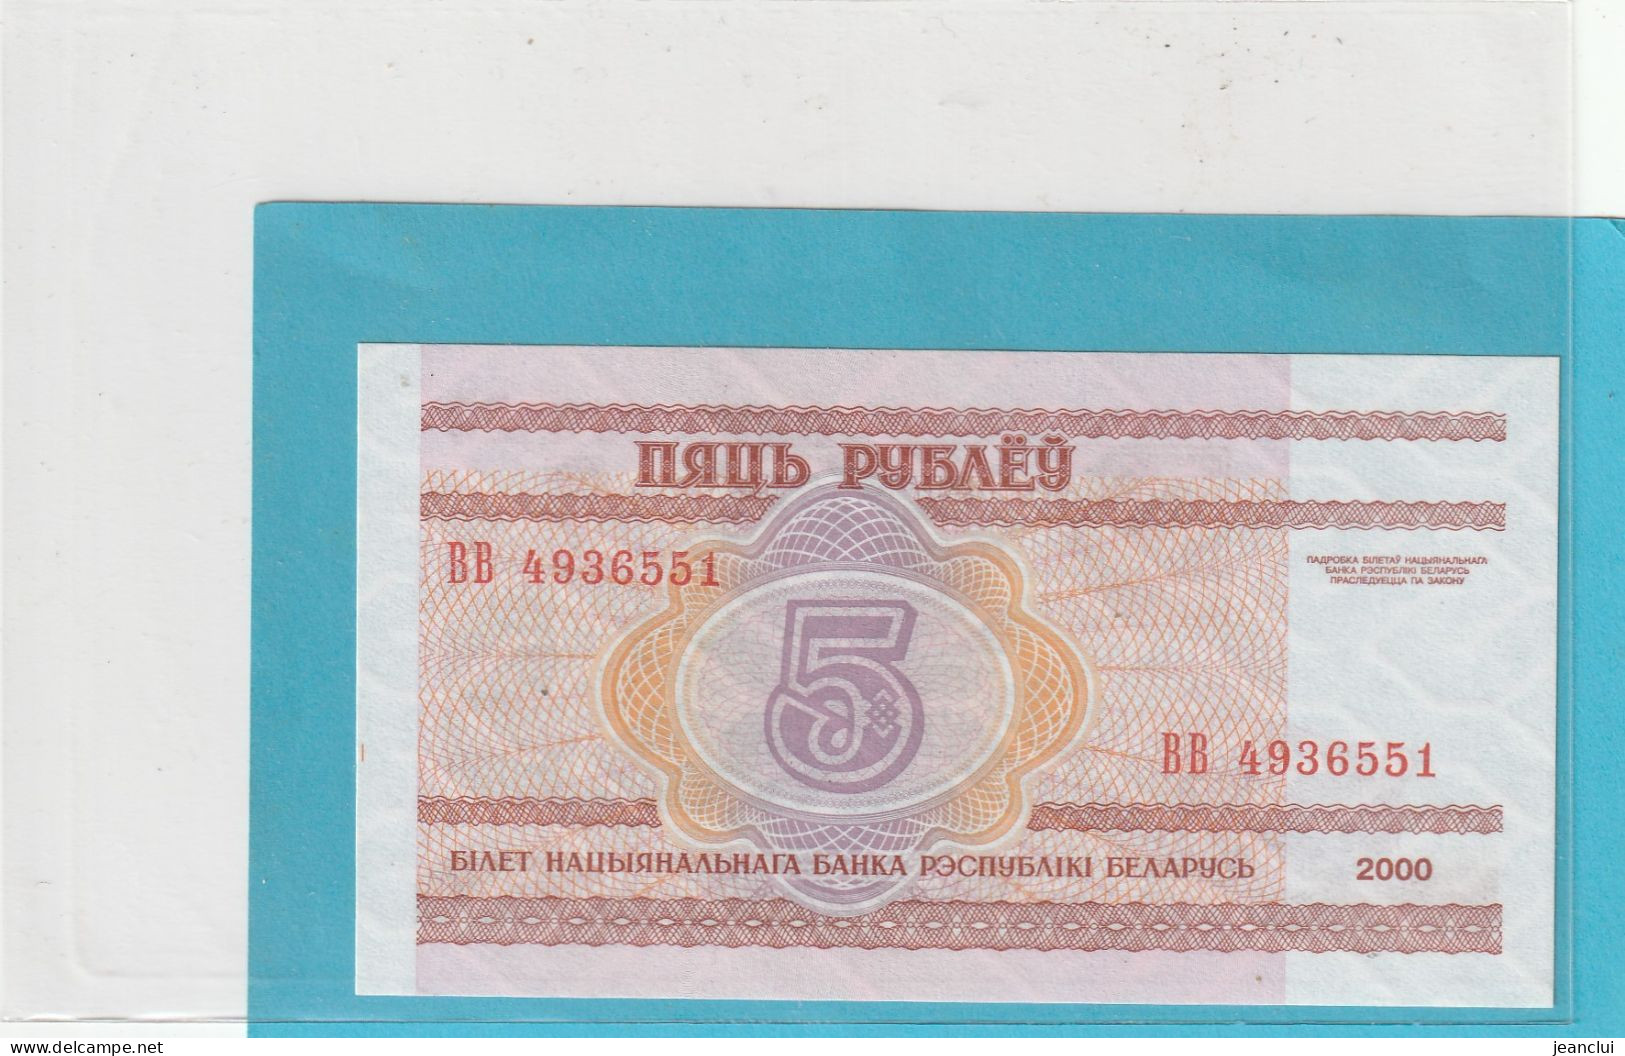 BELARUS NATIONAL BANK  .  5 RUBLEI   . N°  BB 4936551 .  2000     2 SCANNES  .  BILLET ETAT LUXE - Belarus